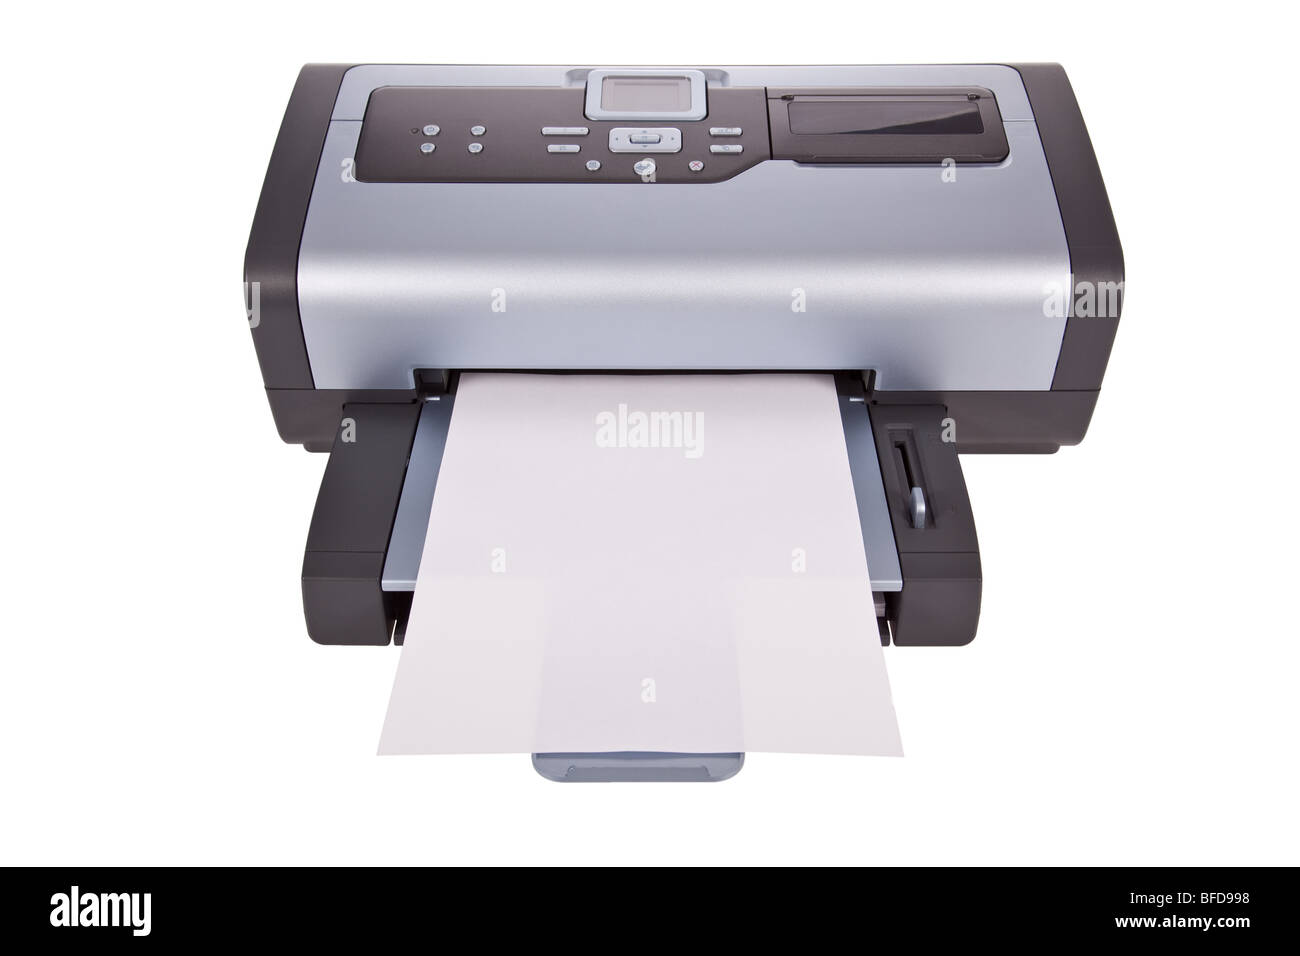 Inkjet printer isolated on a white background Stock Photo